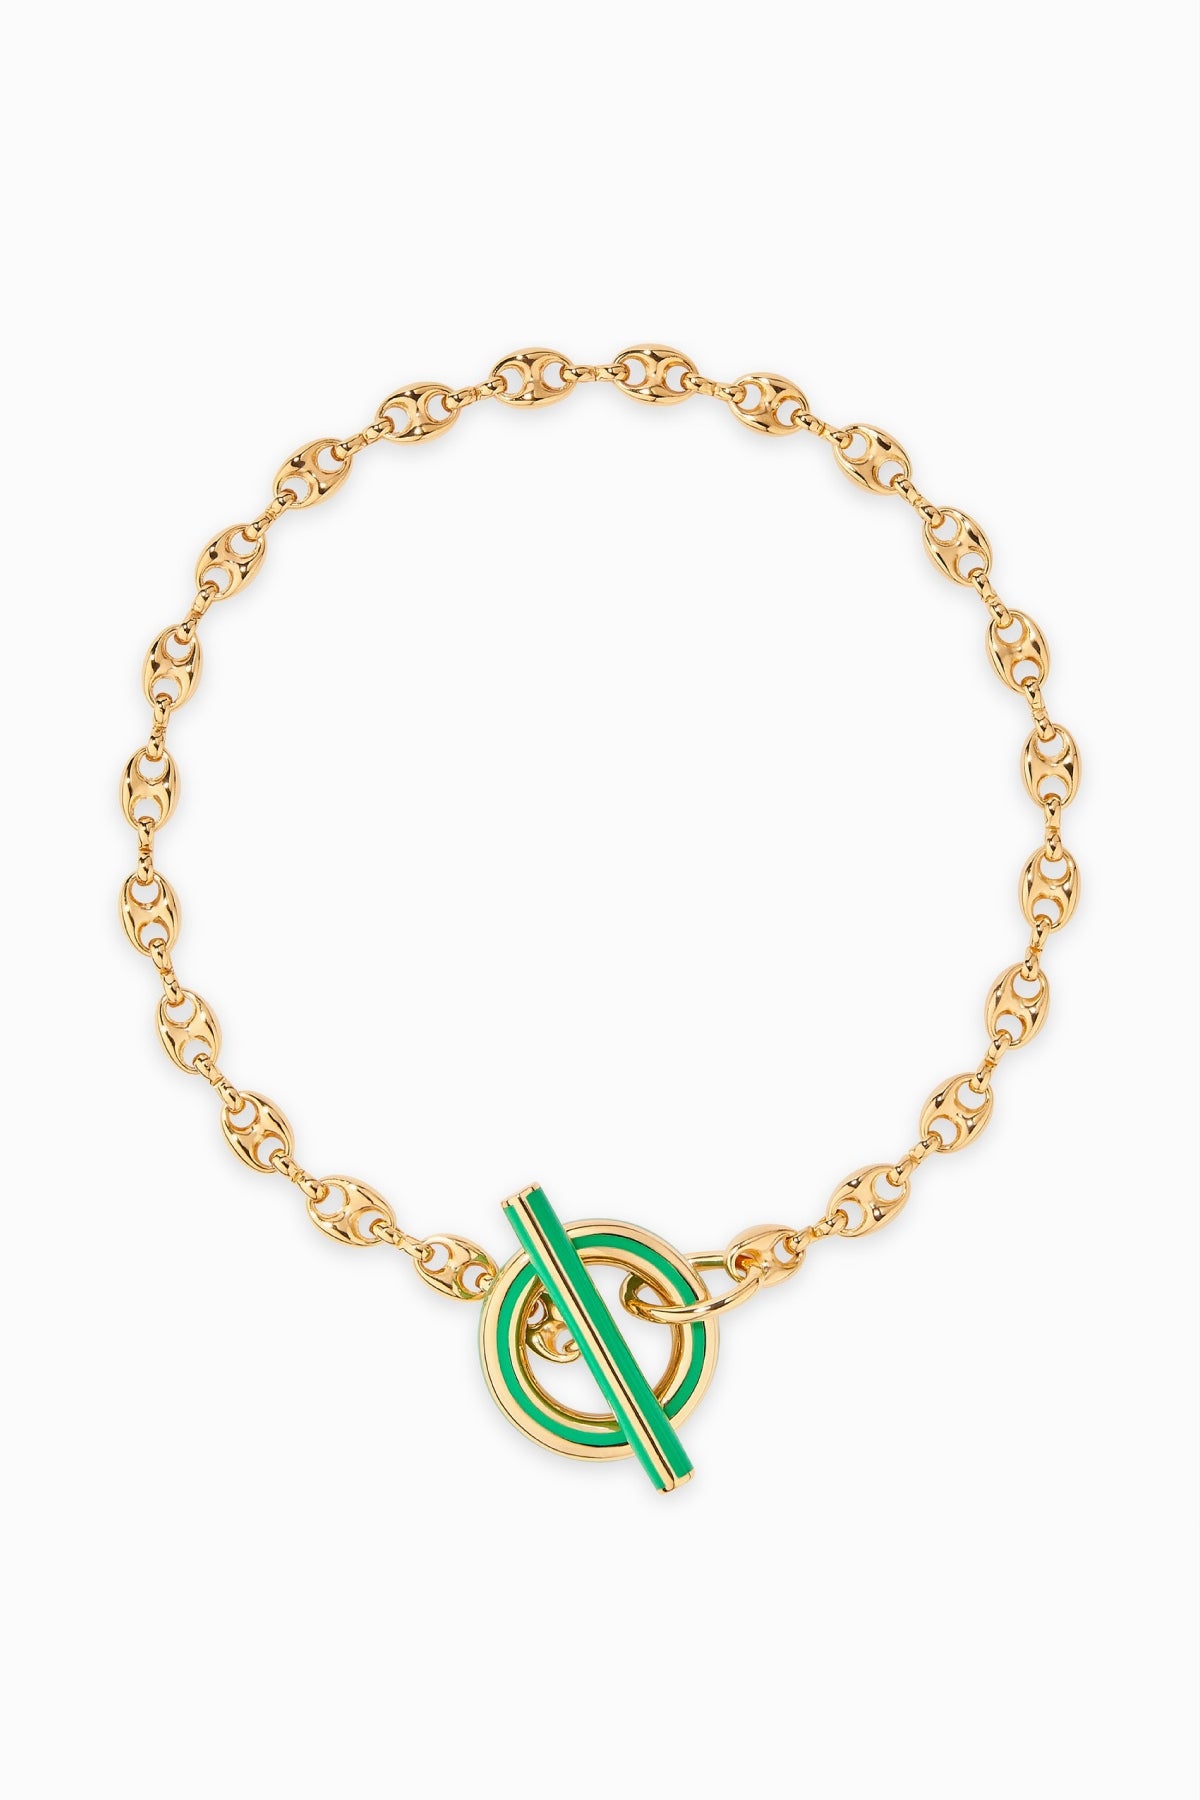 Aurelie Bidermann Tarsila Chain Necklace - Gold/ Green